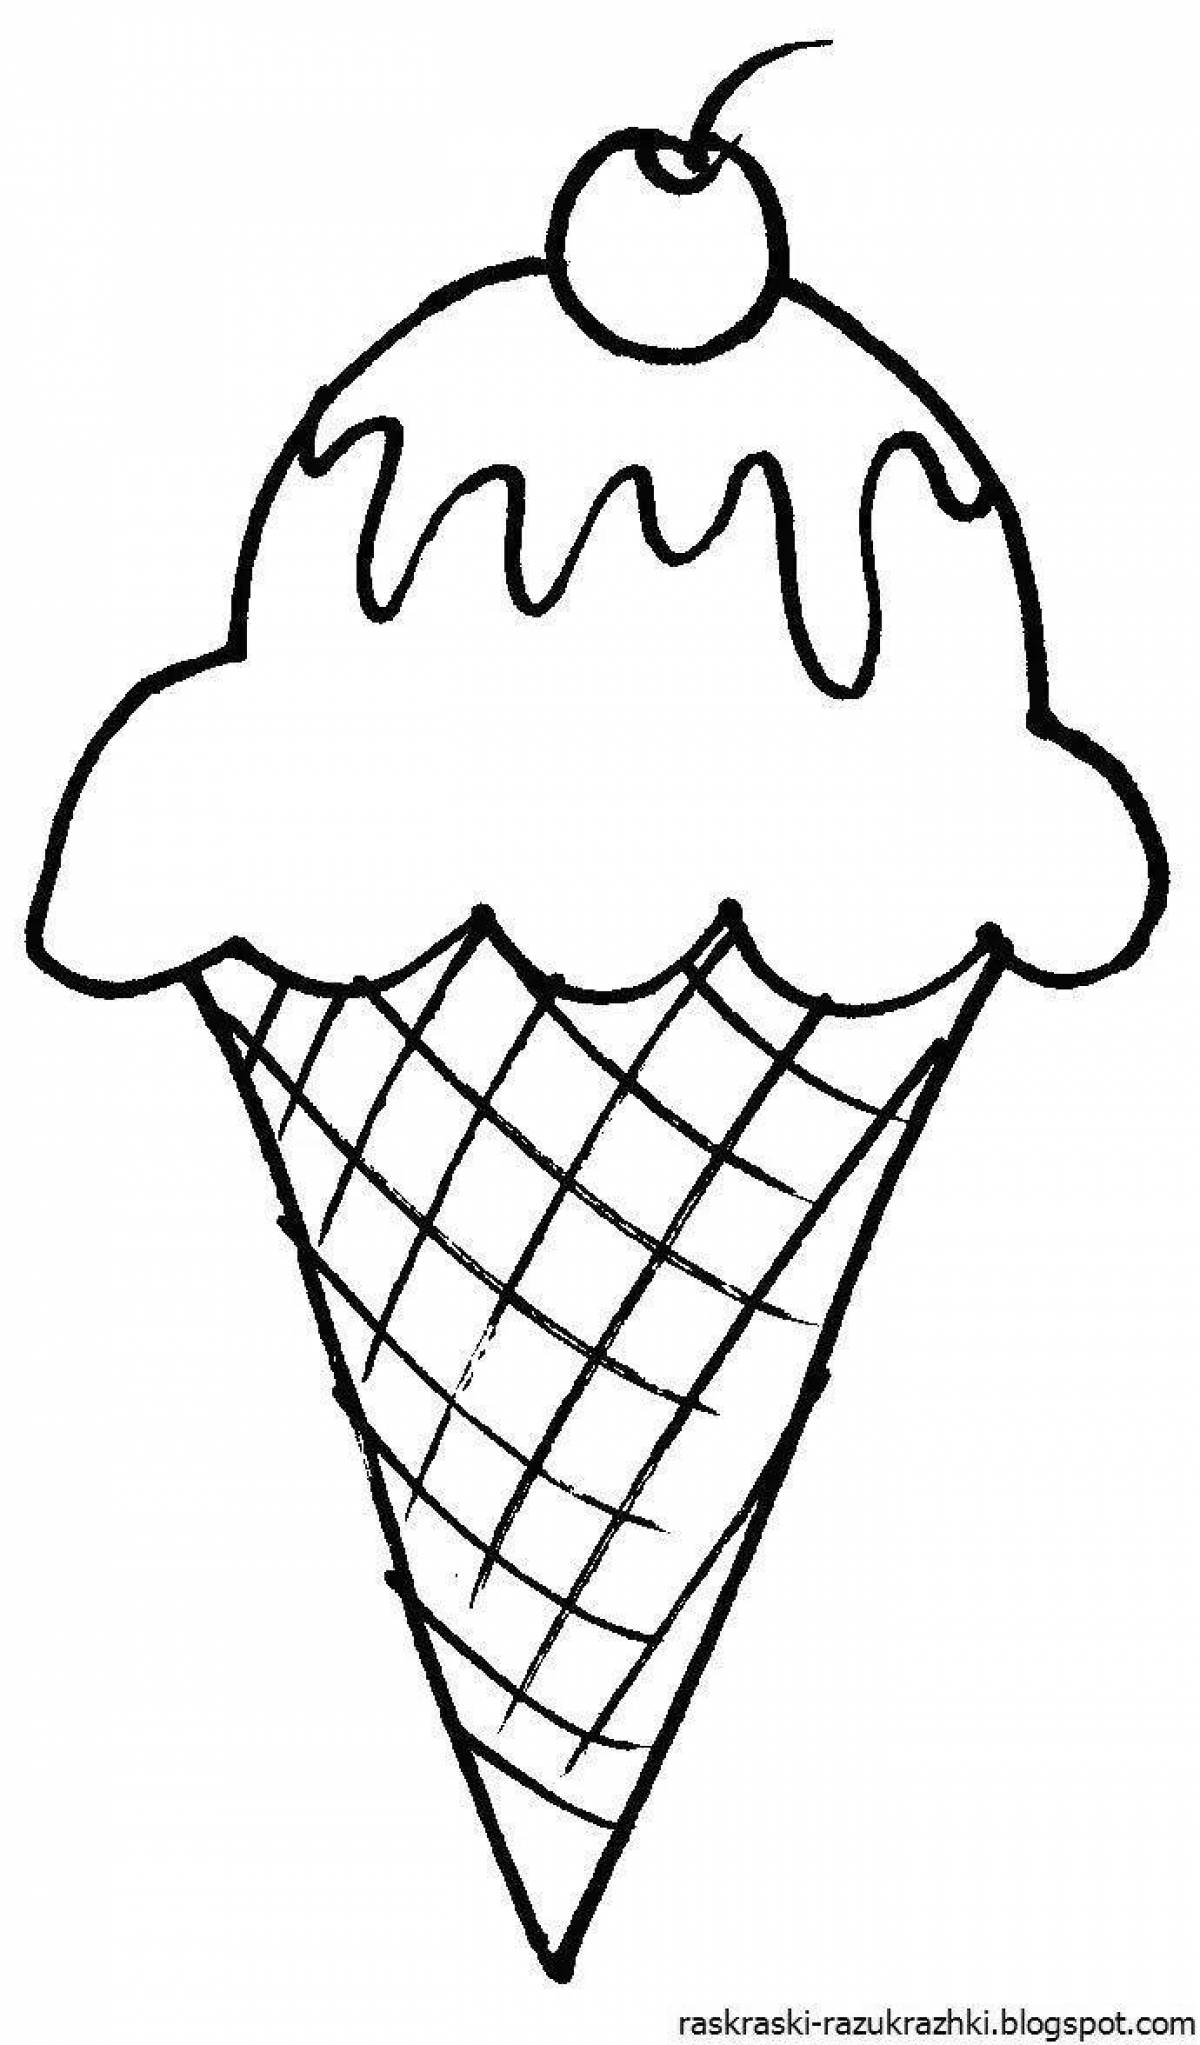 Fascinating ice cream drawing